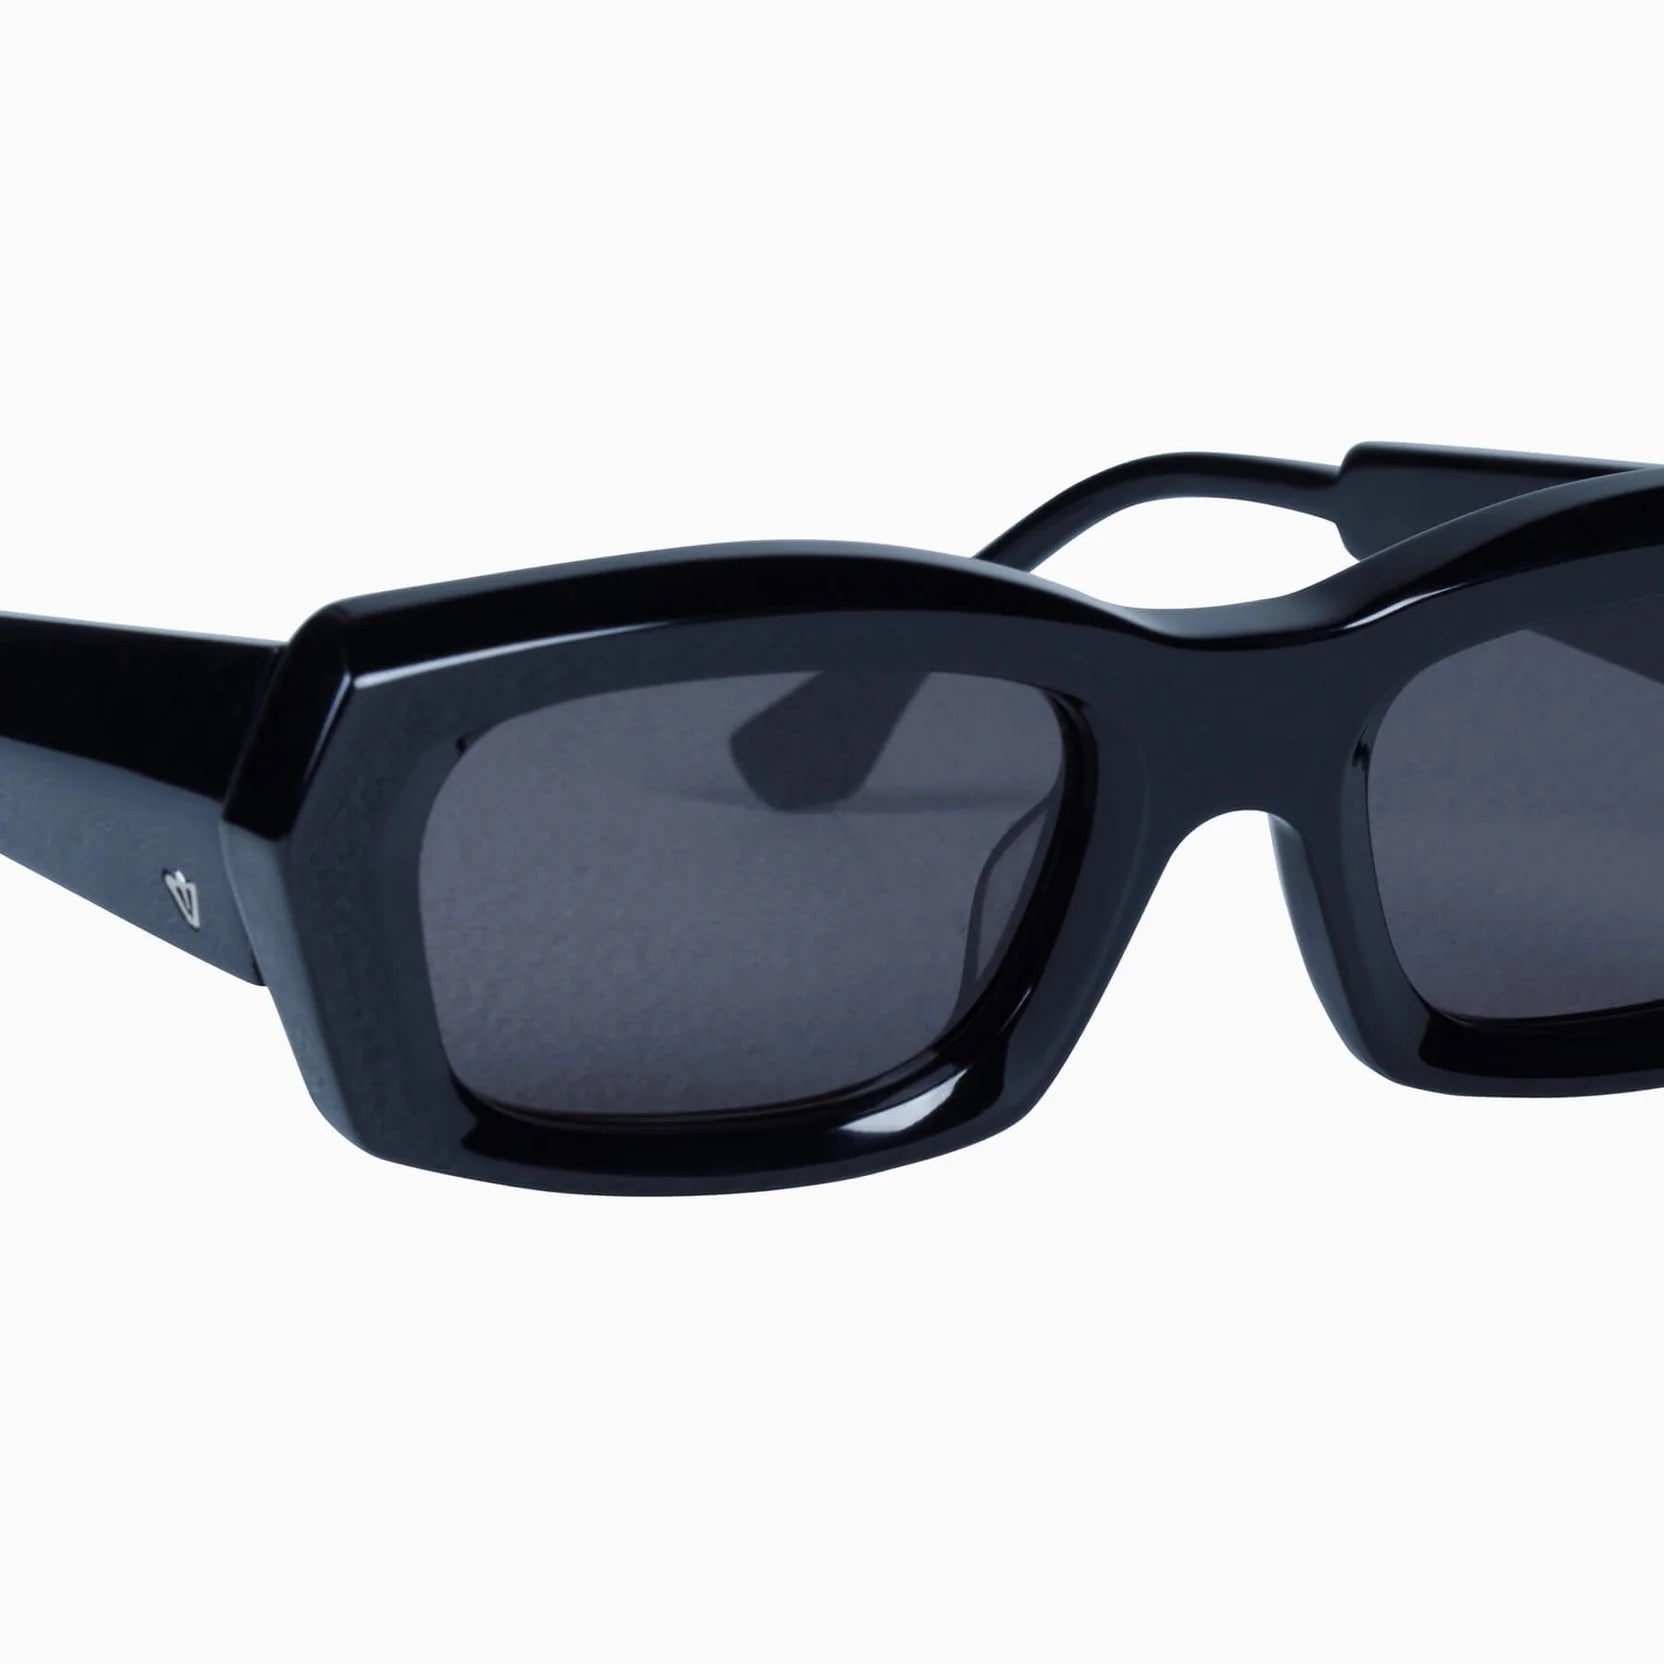 Holycity | Sunglasses - Gloss Black / Black Lens